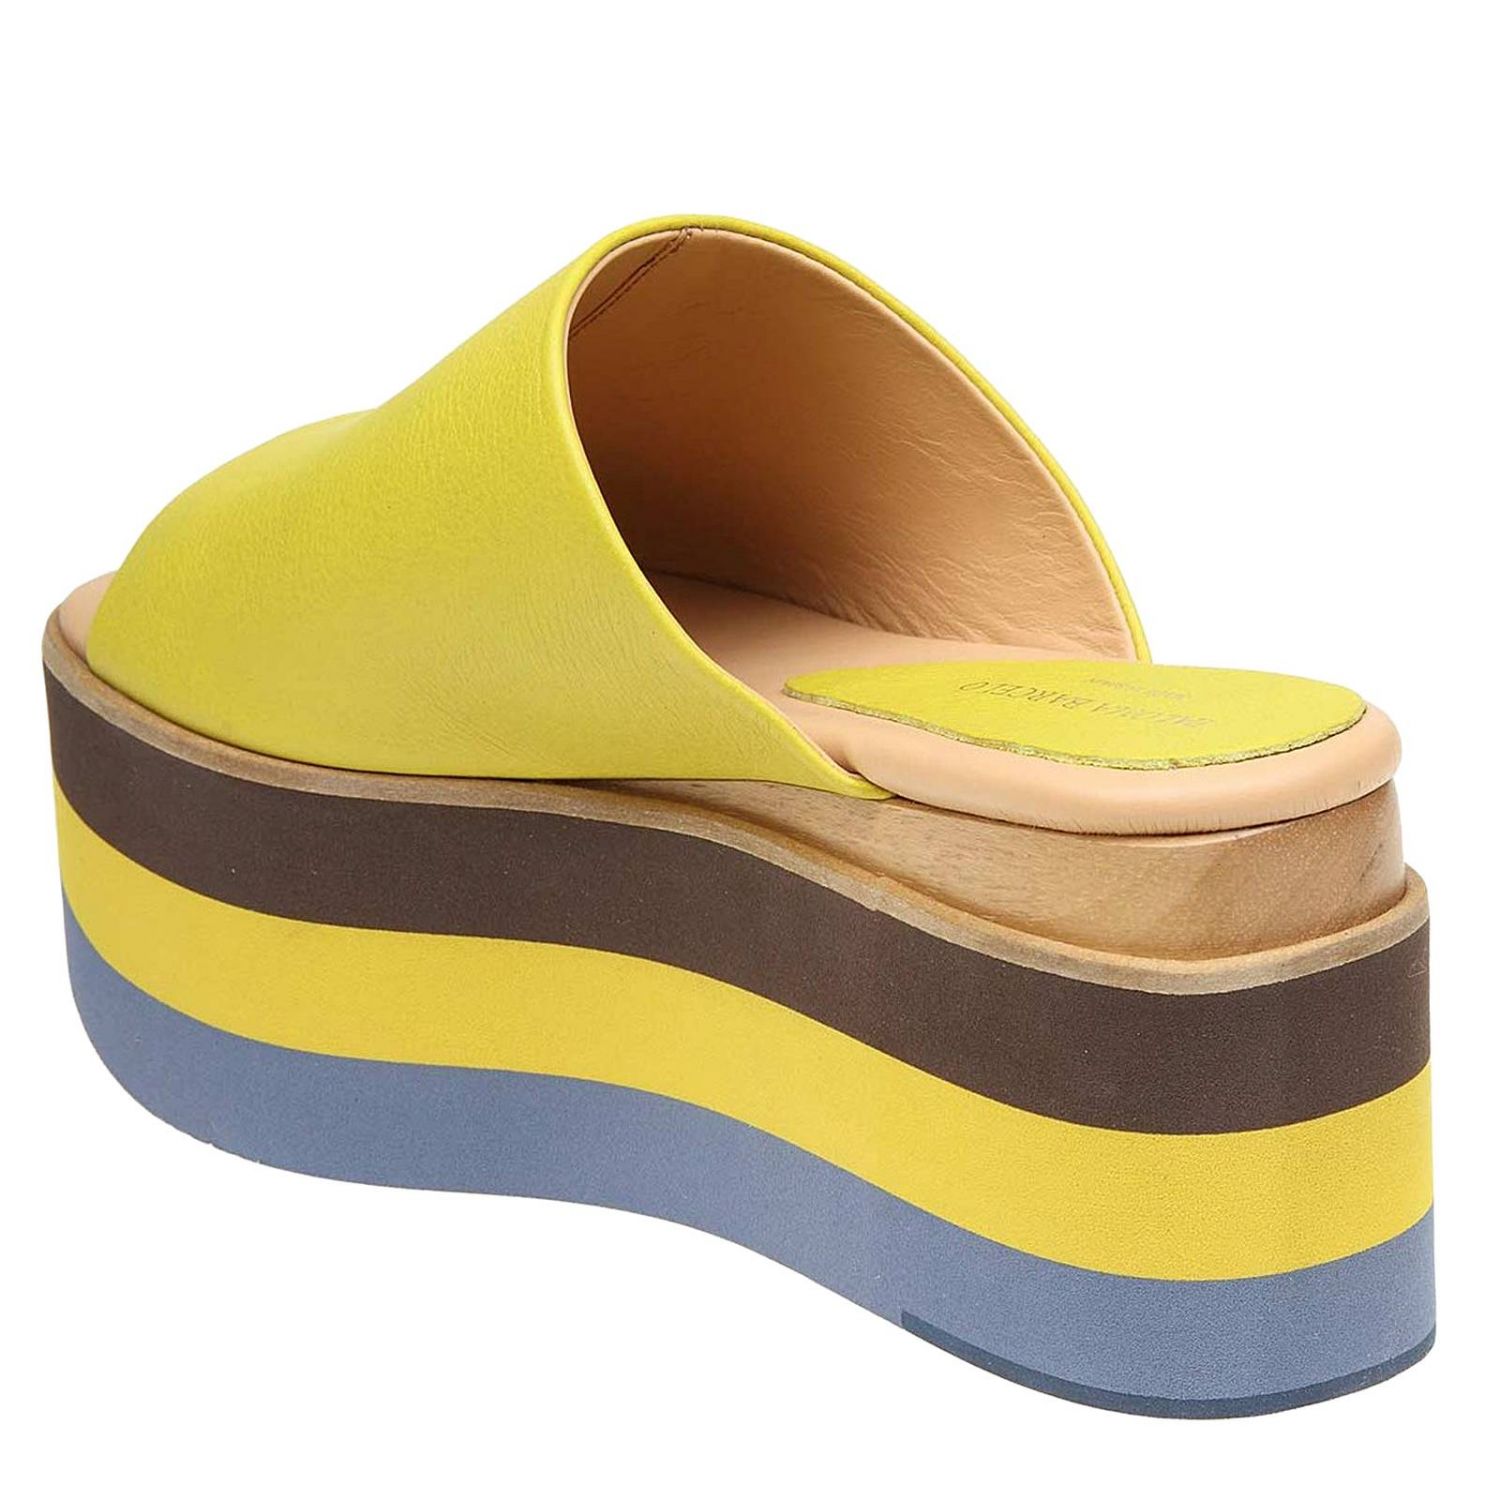 Paloma Barcelò Outlet: Wedge shoes women Paloma BarcelÒ - Yellow ...